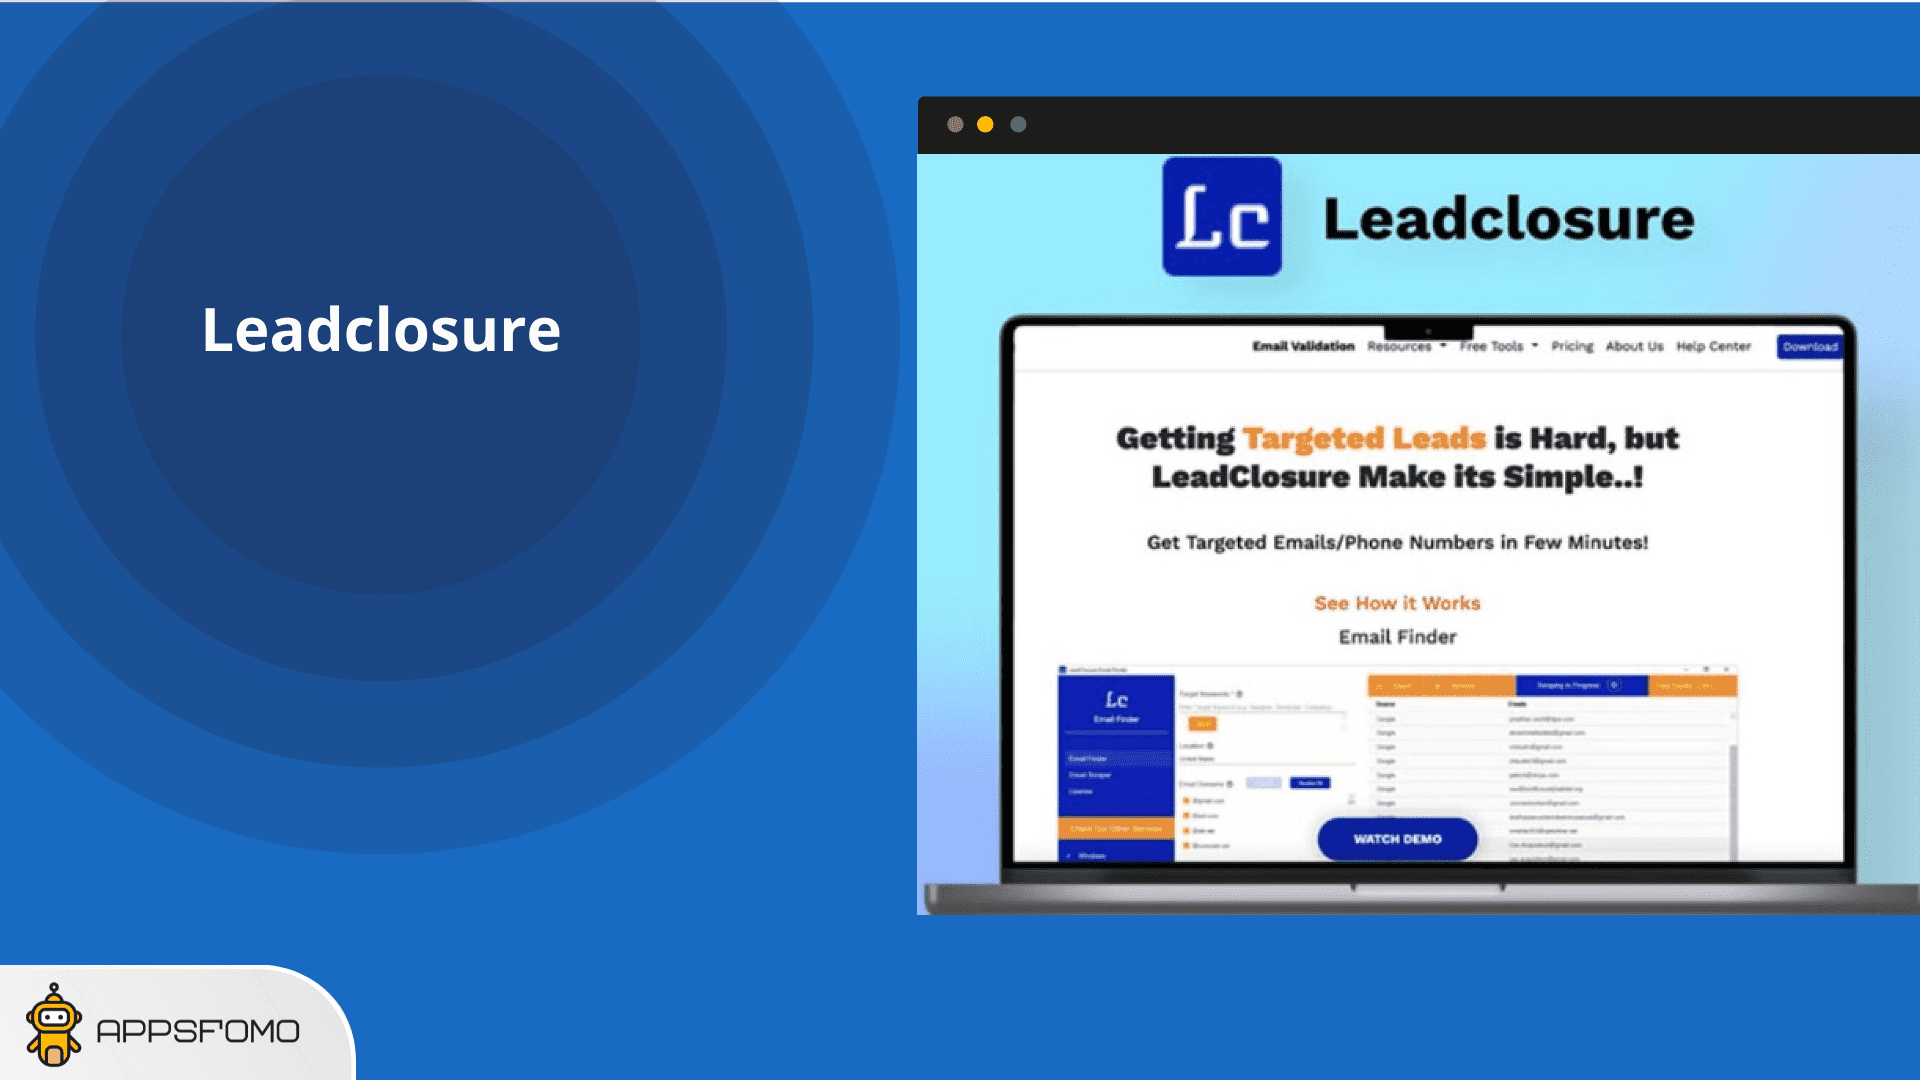 LeadClosure